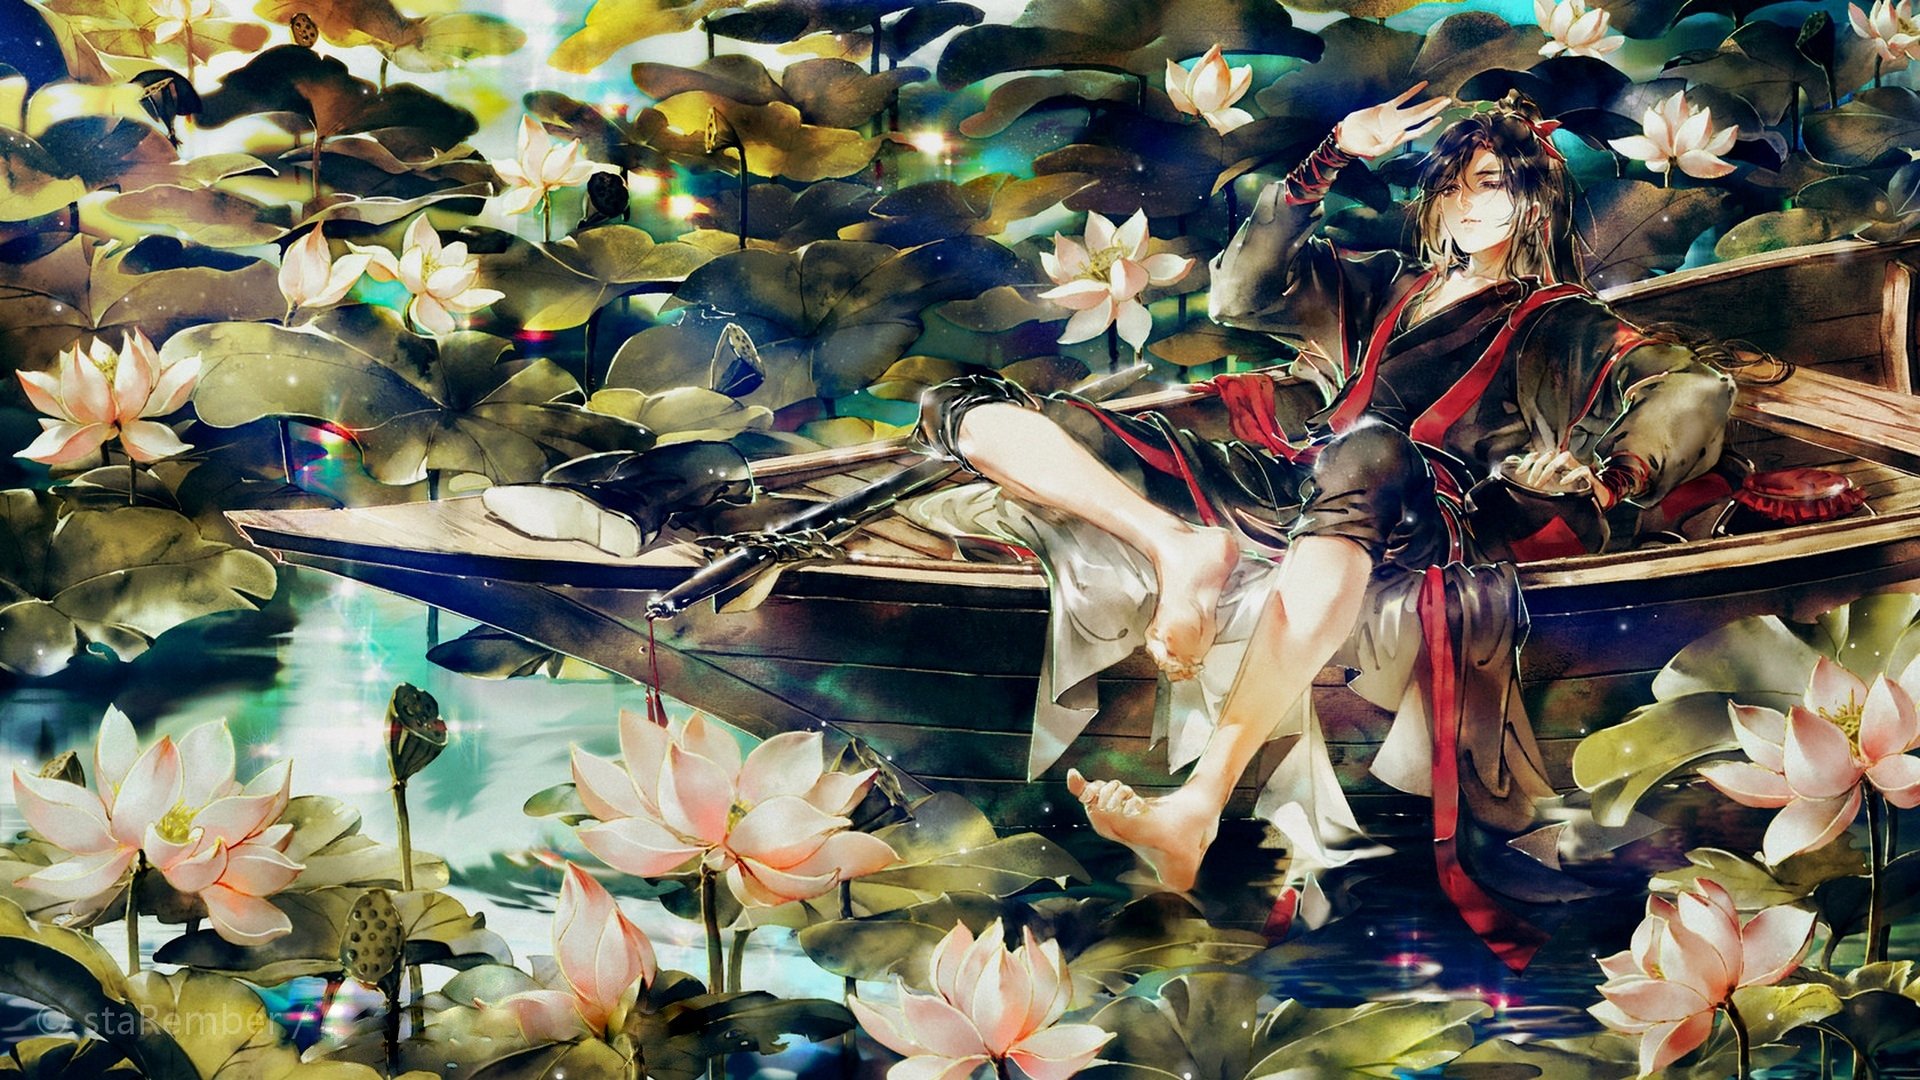 Anime Mo Dao Zu Shi Wallpaper - Resolution:1920x1080 - ID:1335455 